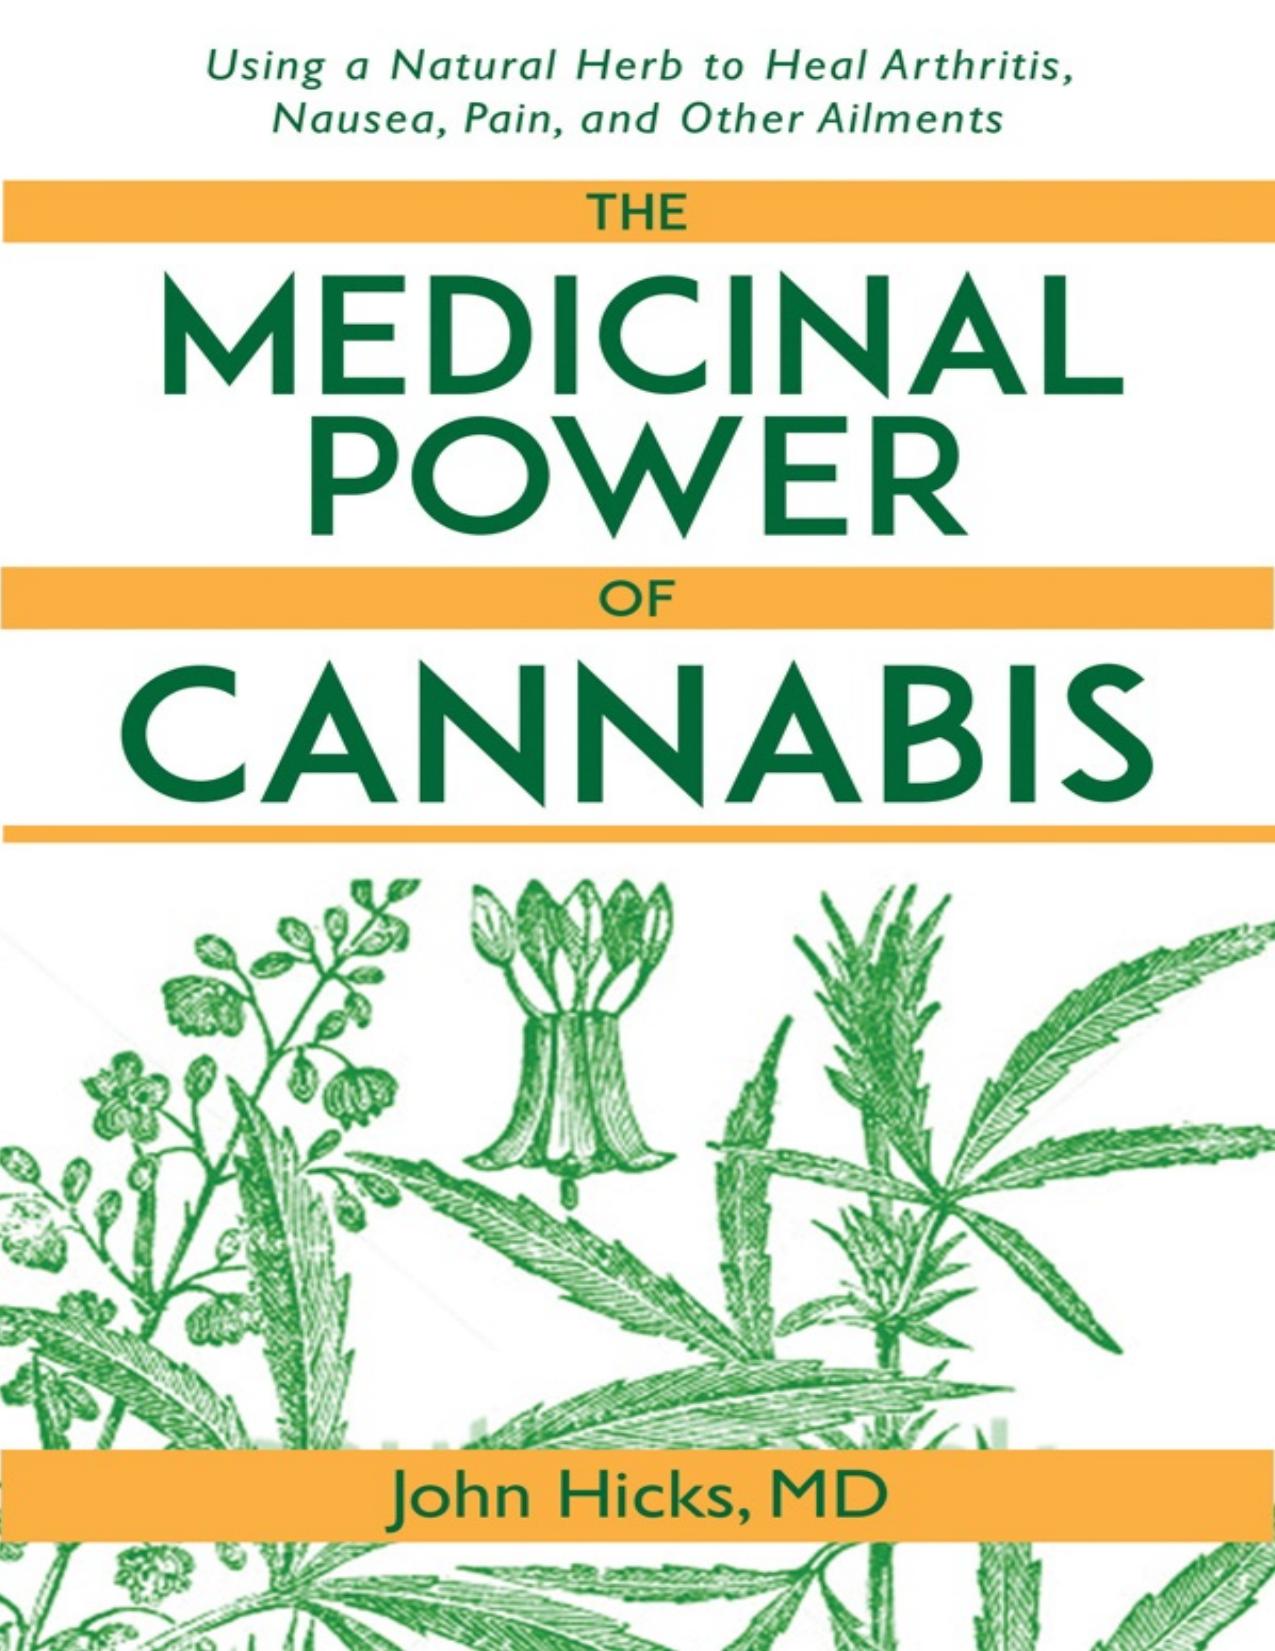 The Medicinal Power of Cannabis by John Hicks